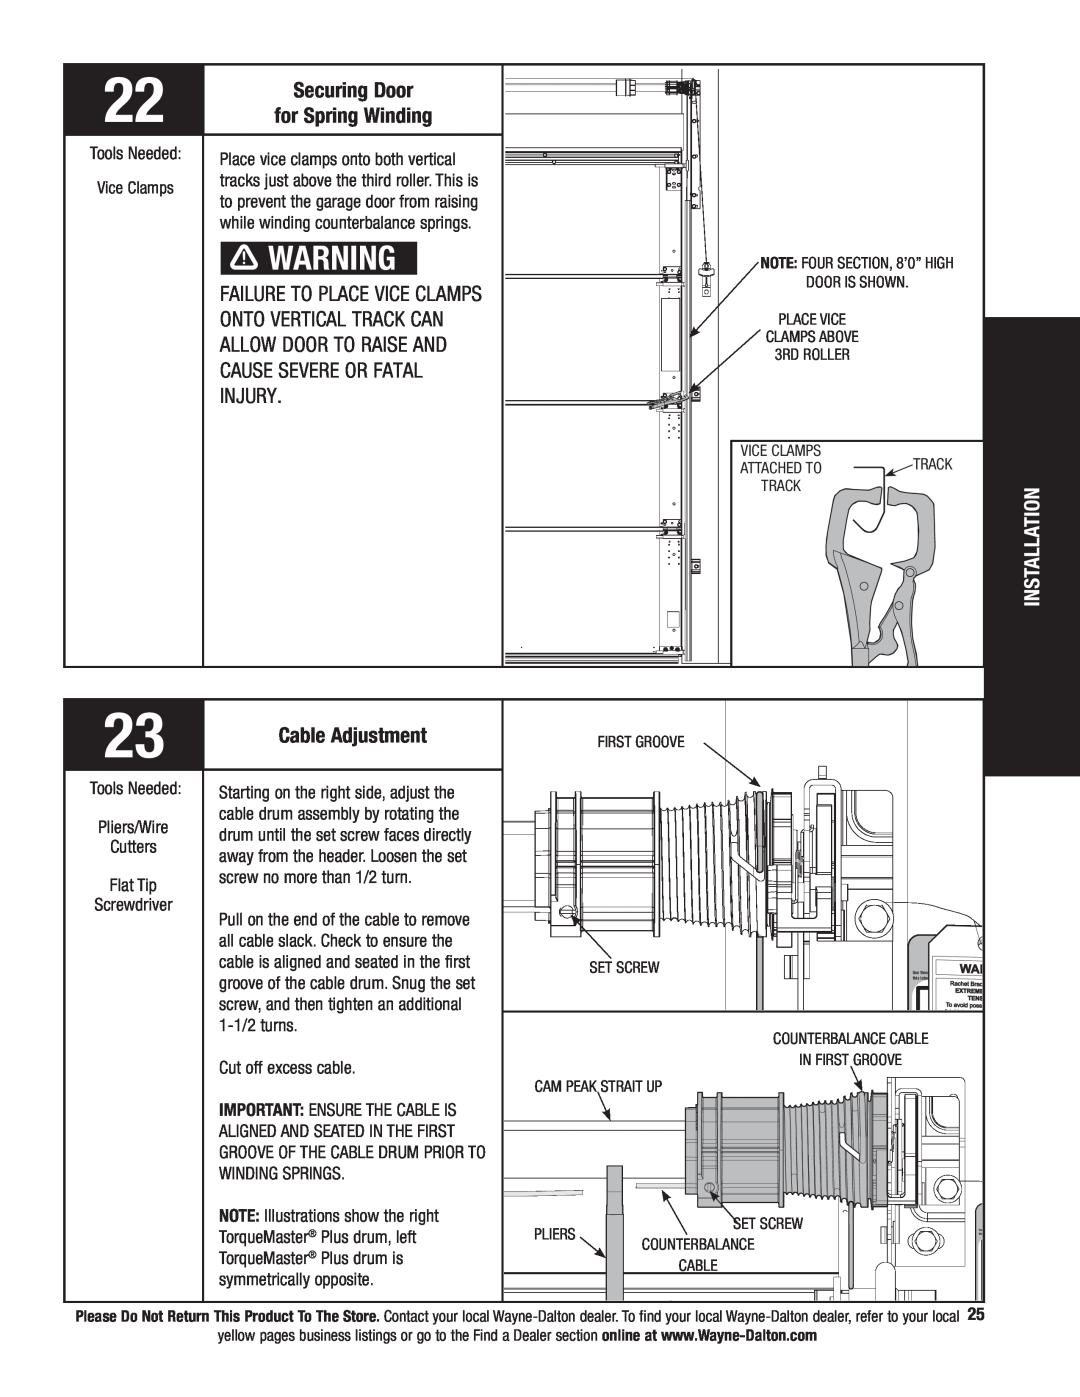 Wayne-Dalton 341458 installation instructions Securing Door for Spring Winding, Cable Adjustment, Installation 